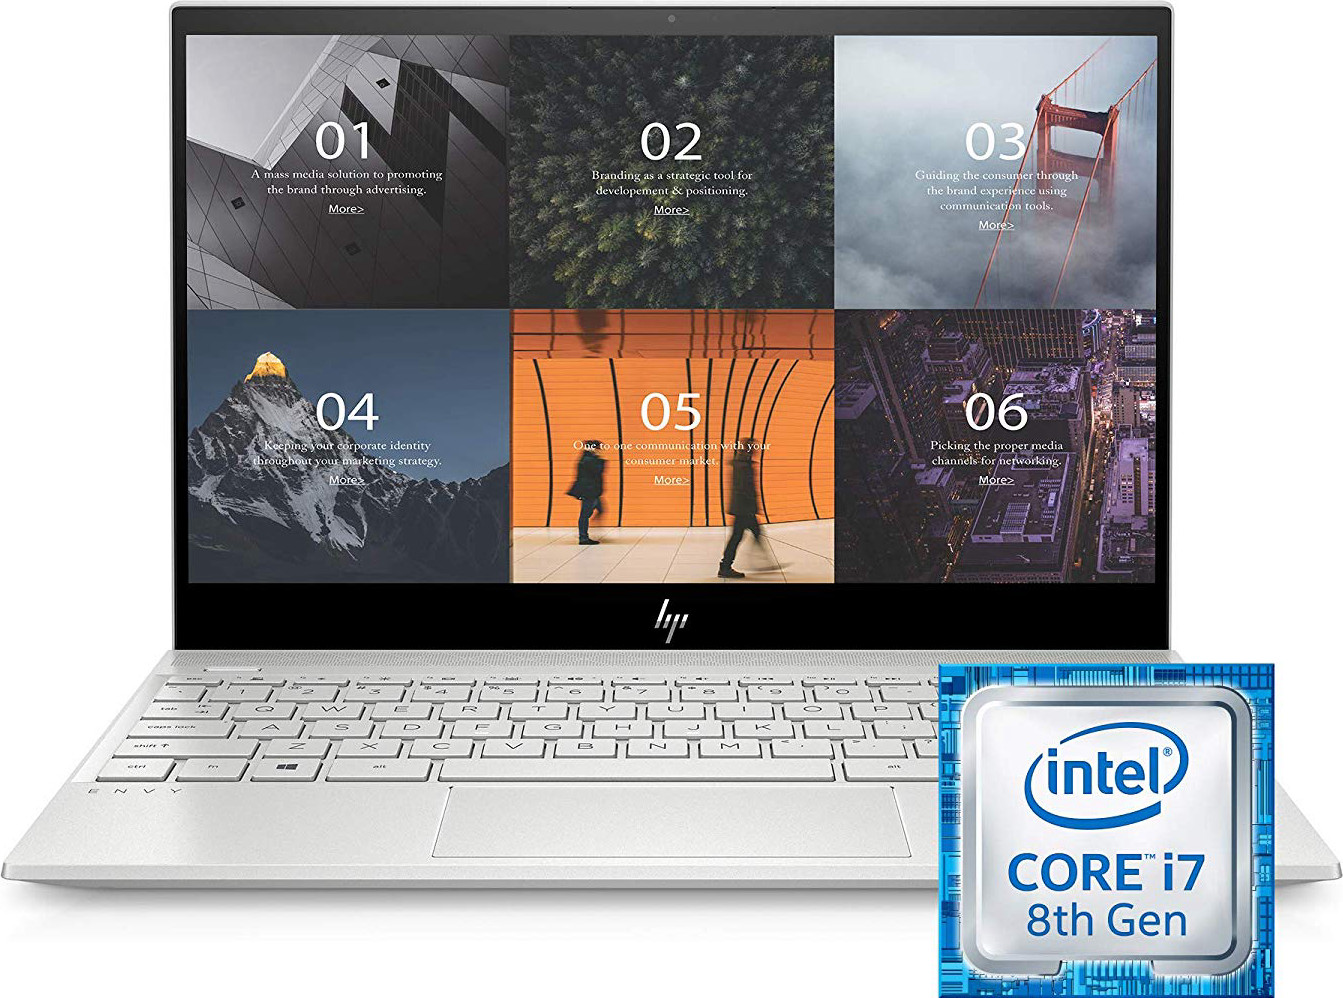 HP ENVY 13” Thin Laptop w/ Fingerprint Reader, 4K Touchscreen, Intel Core i7-8565U, NVIDIA GeForce MX250 Graphics, 16GB SDRAM, 512GB SSD, Windows 10 Home (13-aq0044nr, Natural Silver)